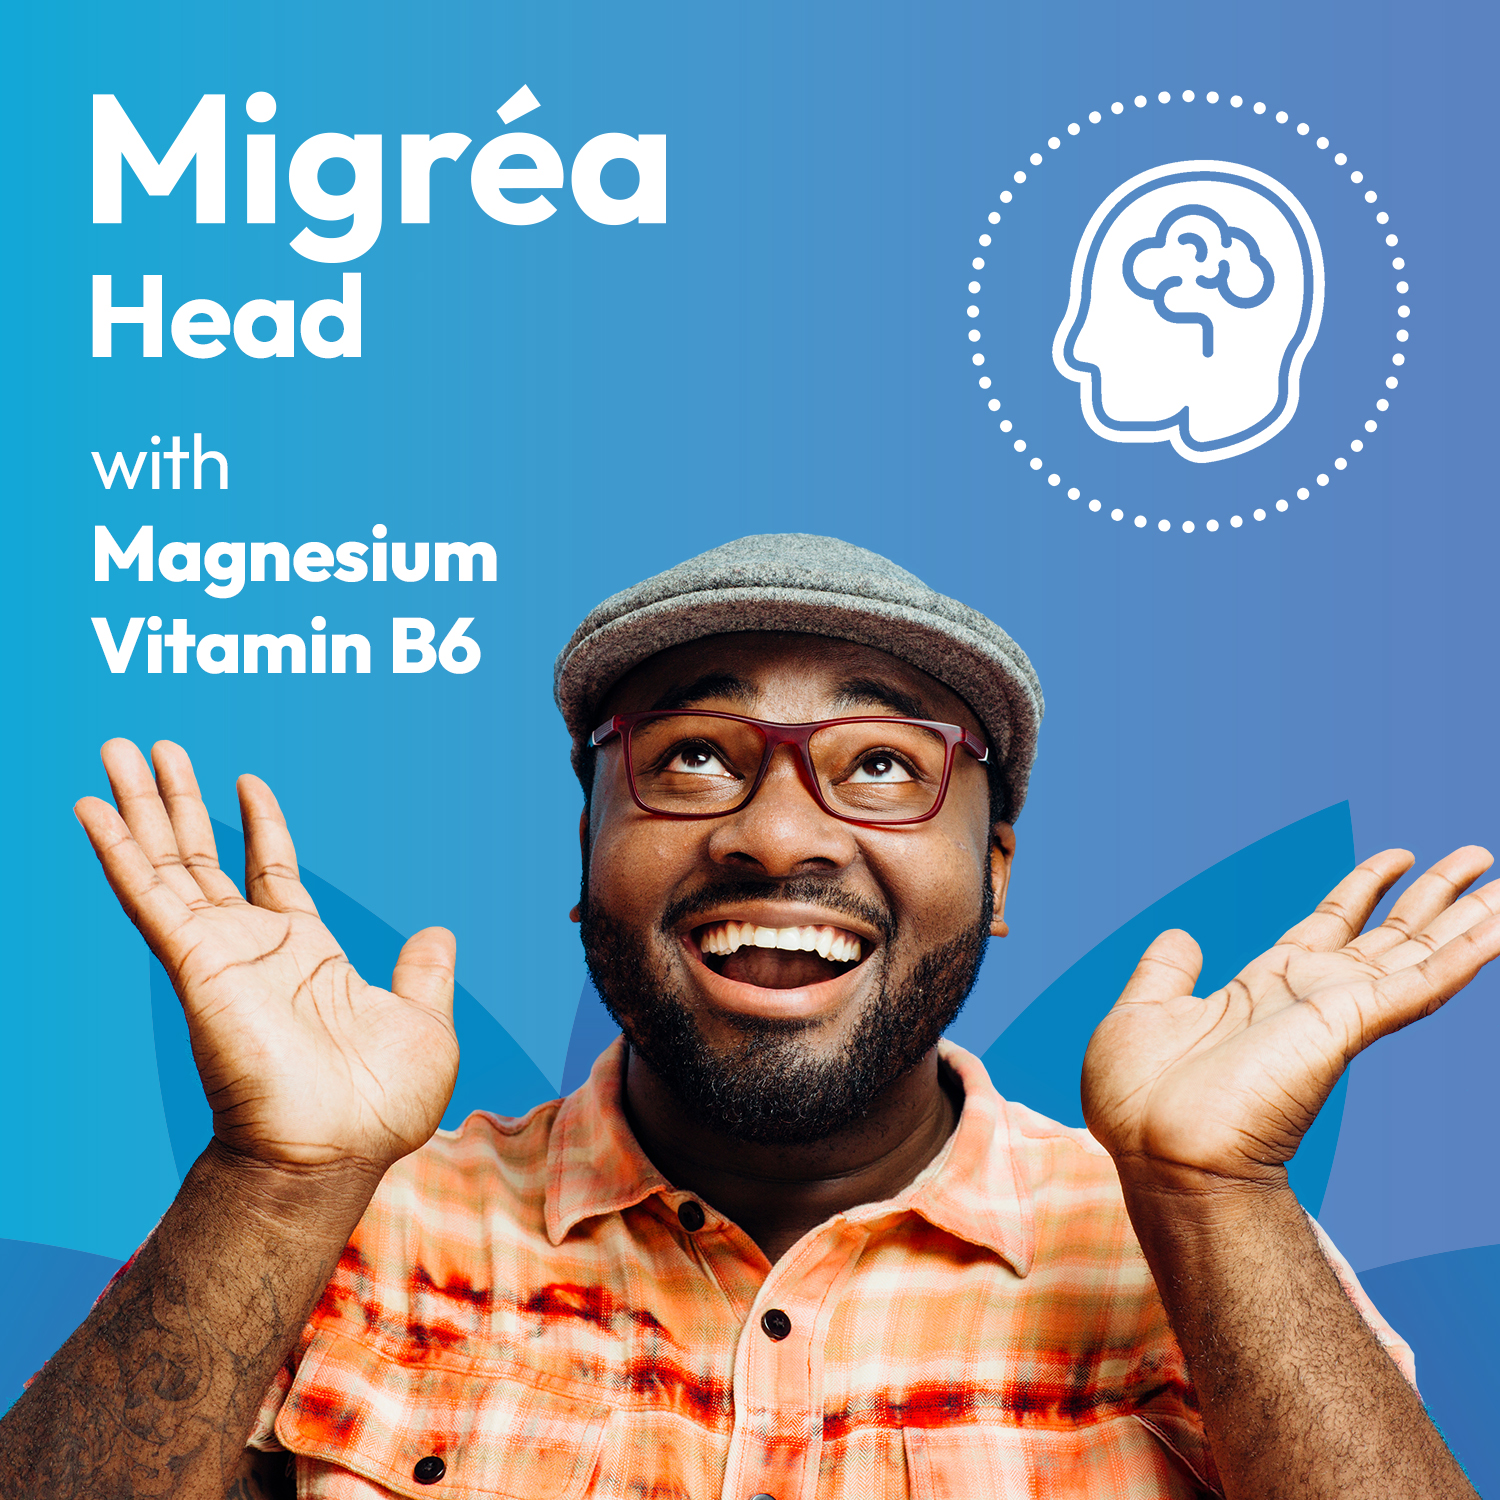 mIGREA HEAD WITH MAGNESIUM VITAMIN b6.